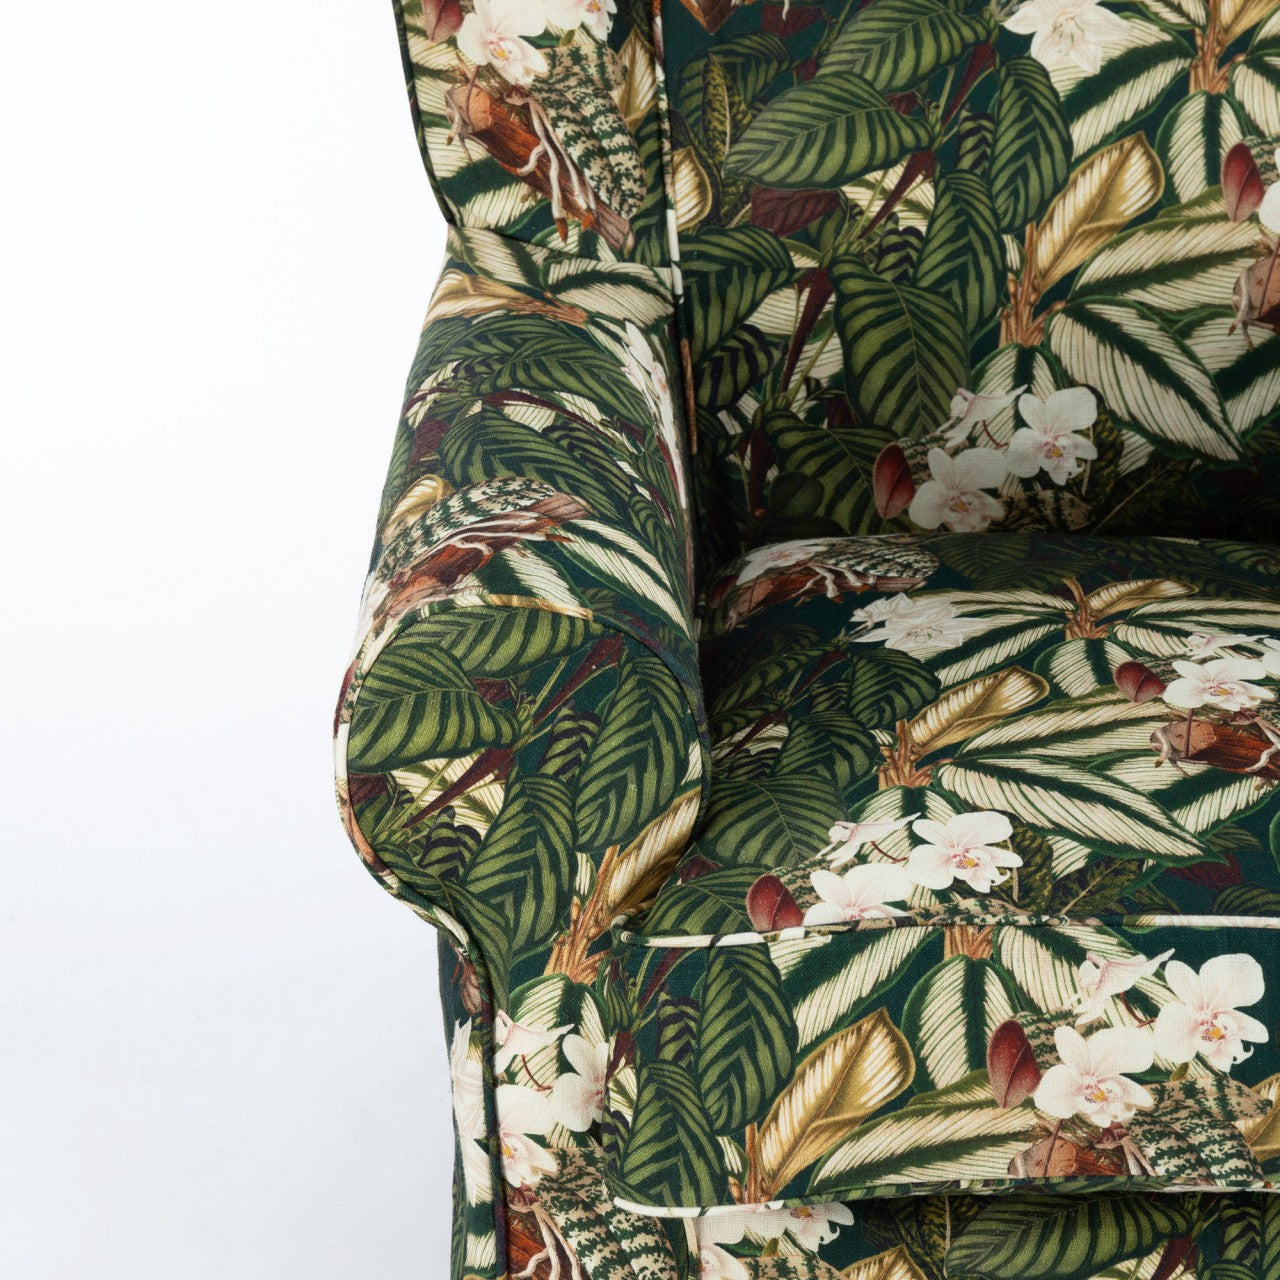 DAKOTA Skirted Chair - ORCHID BLOOM Linen_Furniture_Mindthegap